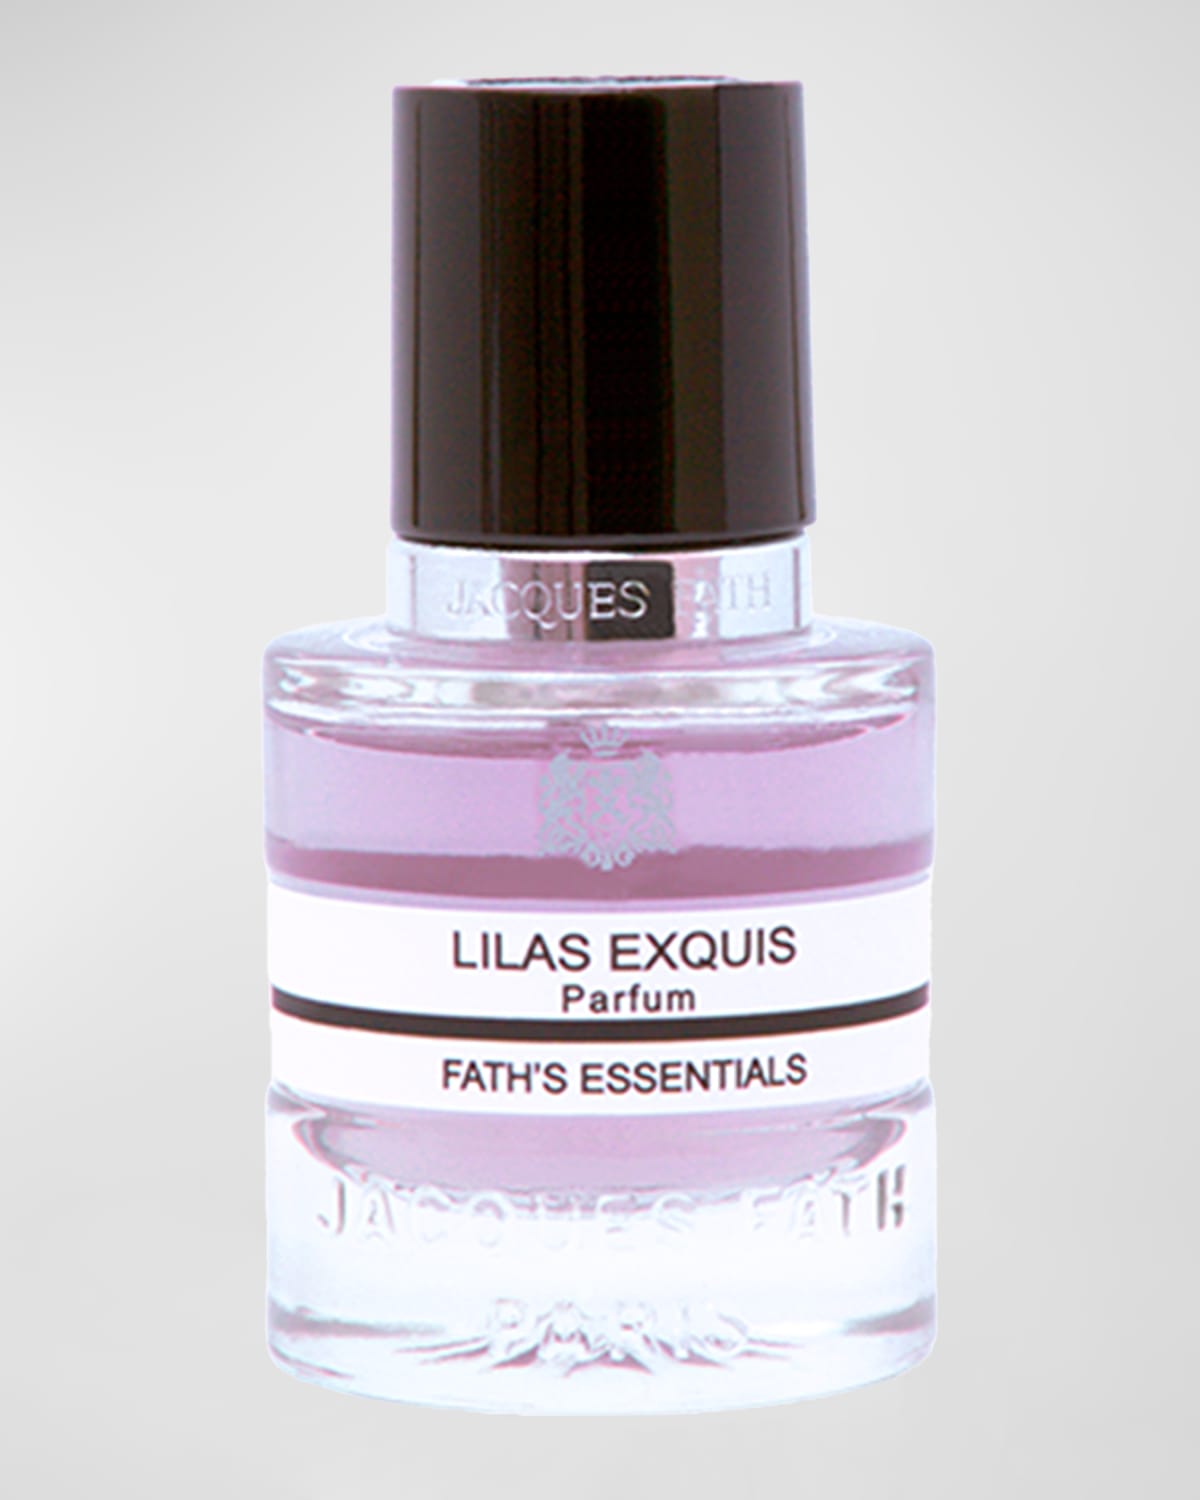 Jacques Fath 0.5 oz. Lilas Exquis Natural Parfum Spray